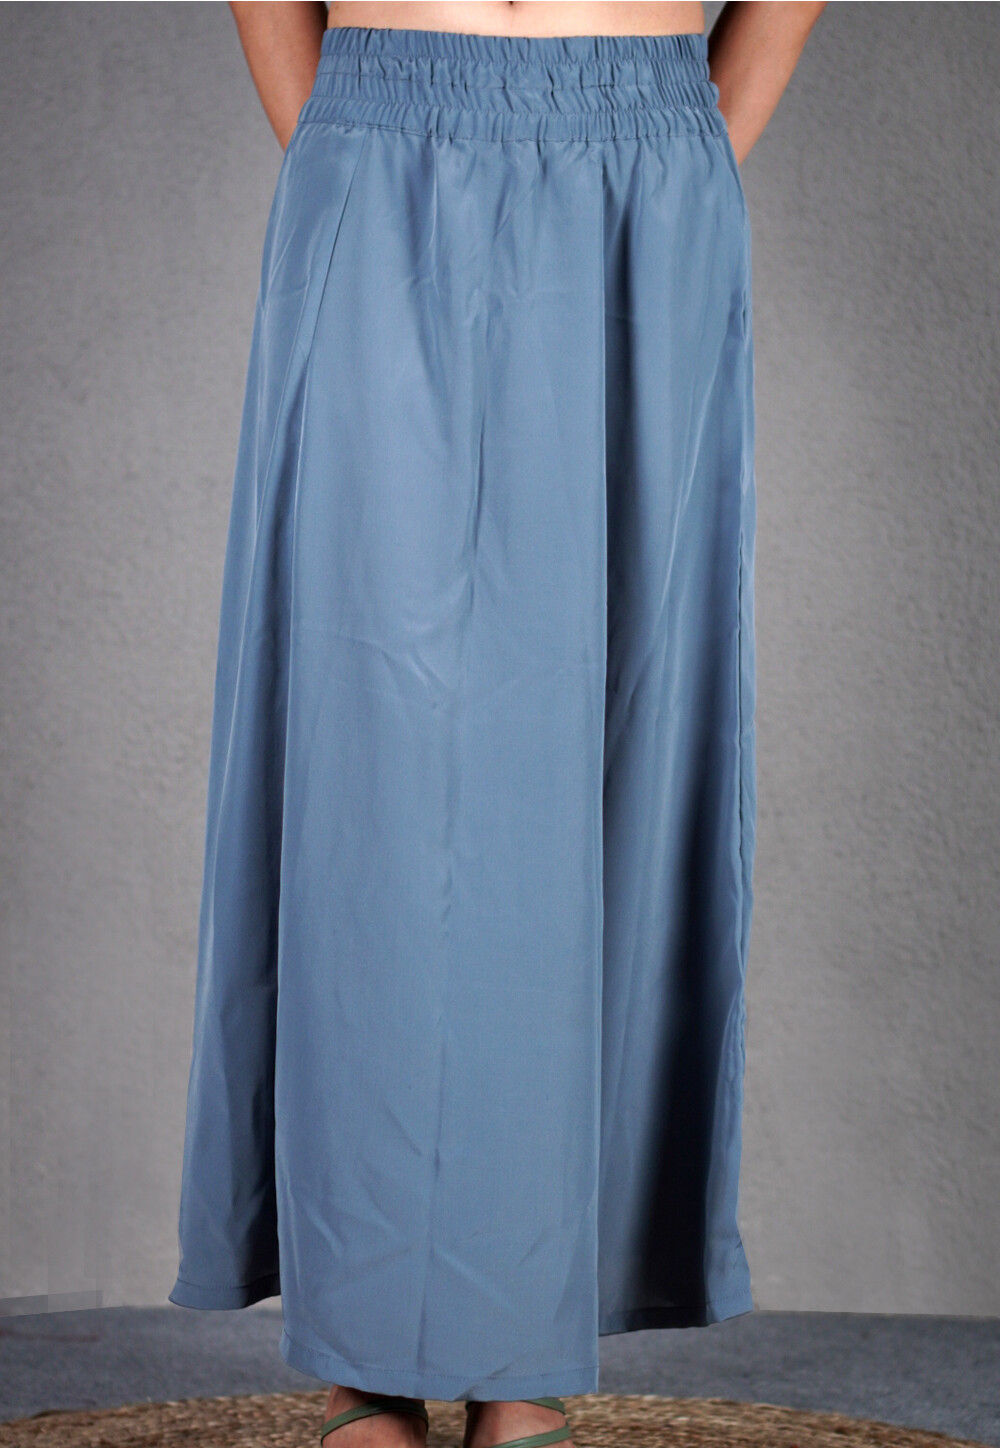 Solid Color Satin Petticoat in Beige : UAC302